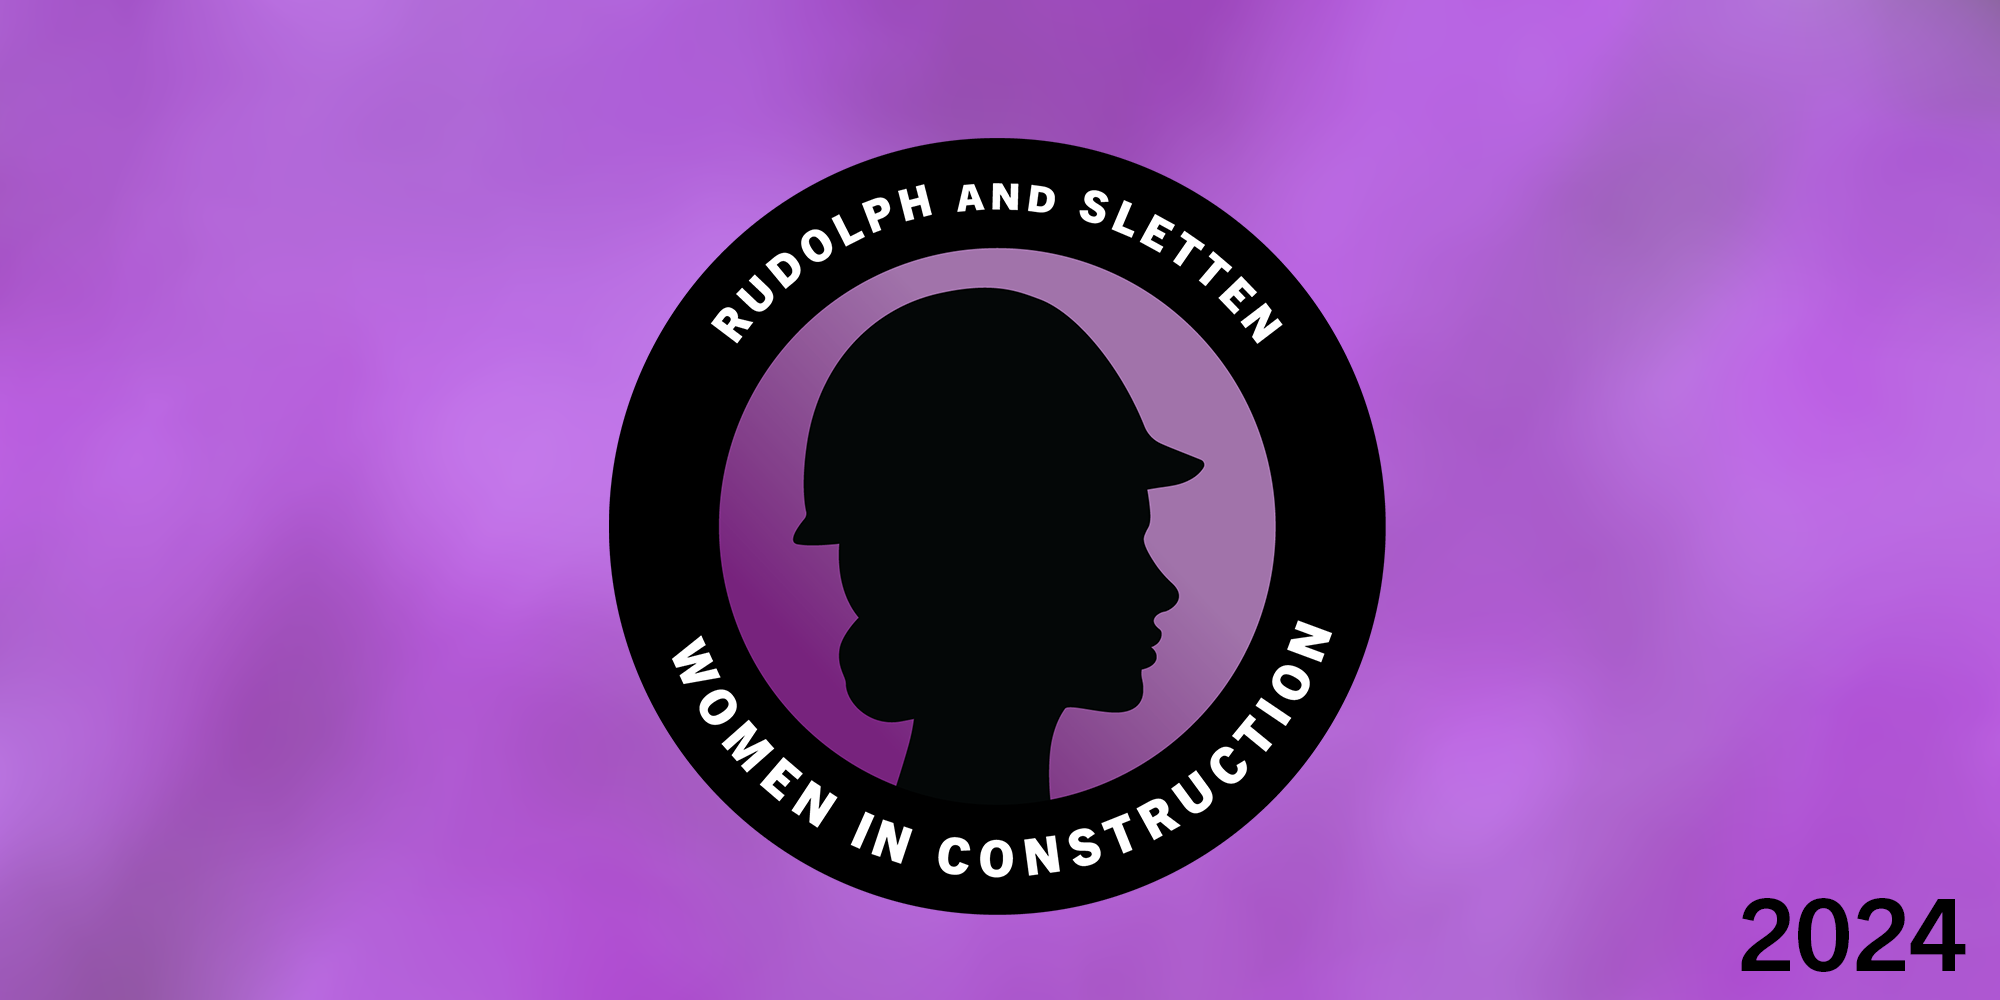 Celebrating R&S’ Women in Construction